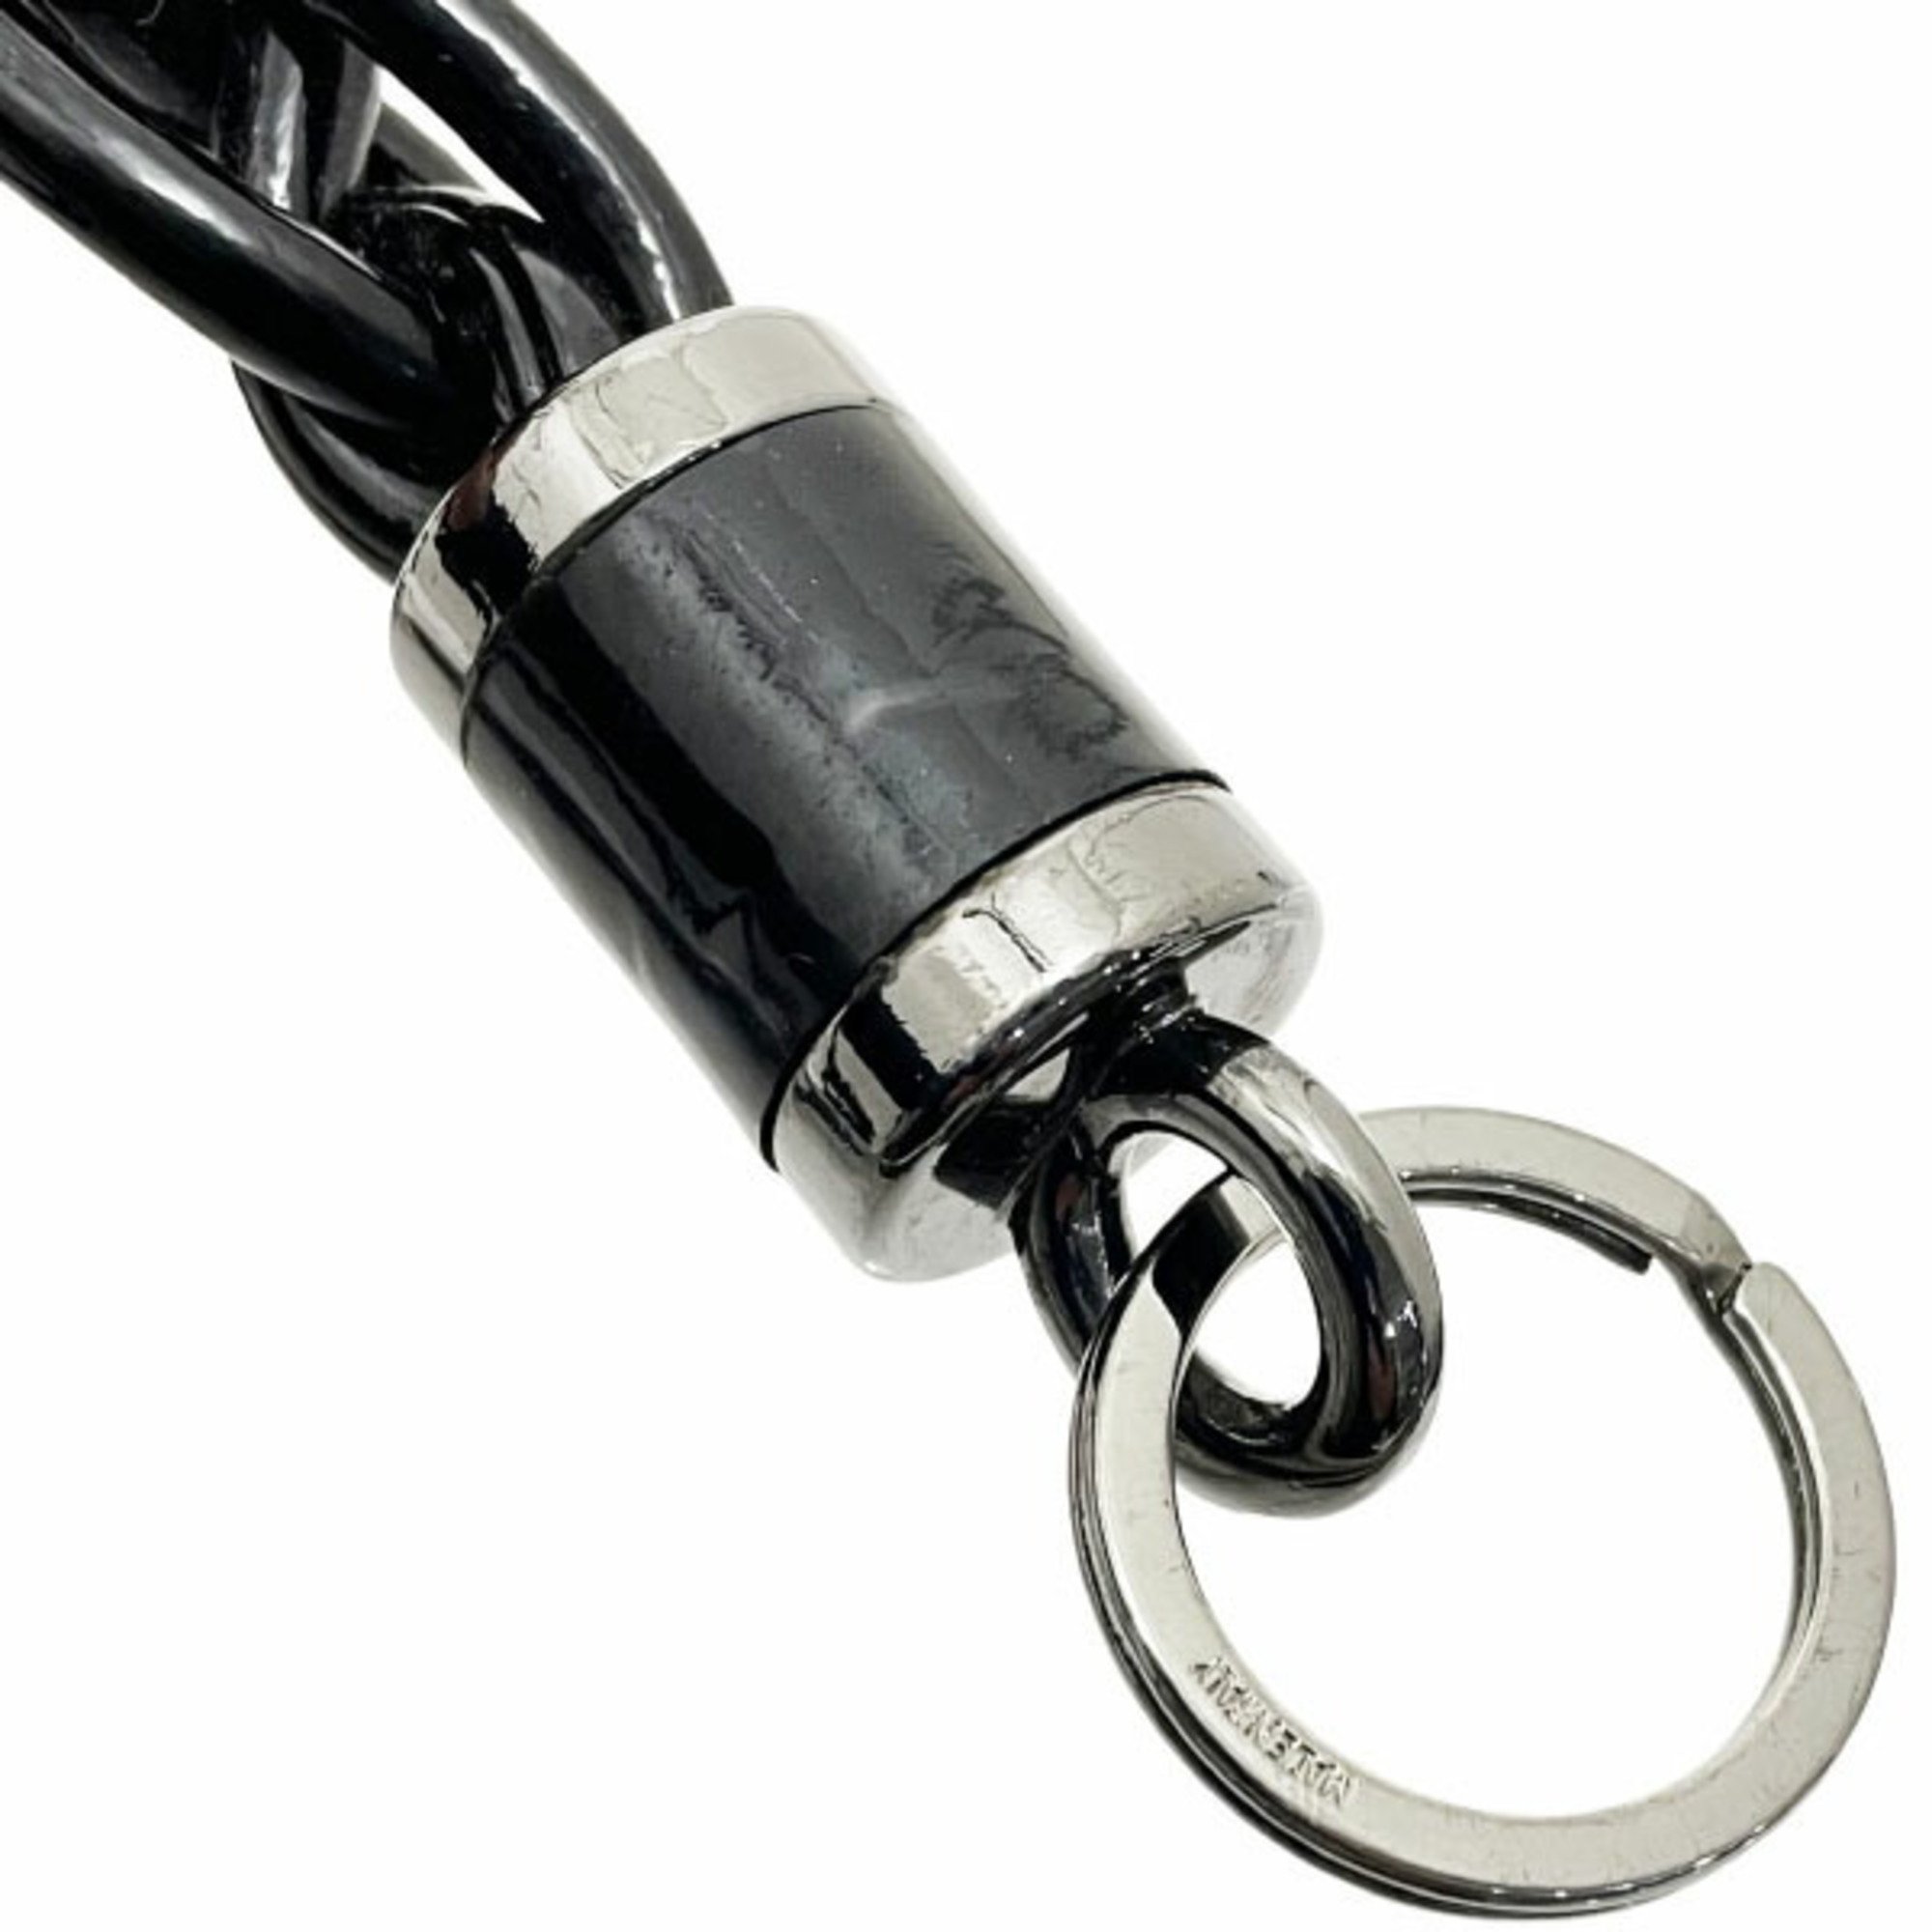 Gucci keychain chain charm enamel black GUCCI key ring bag KAH-11170